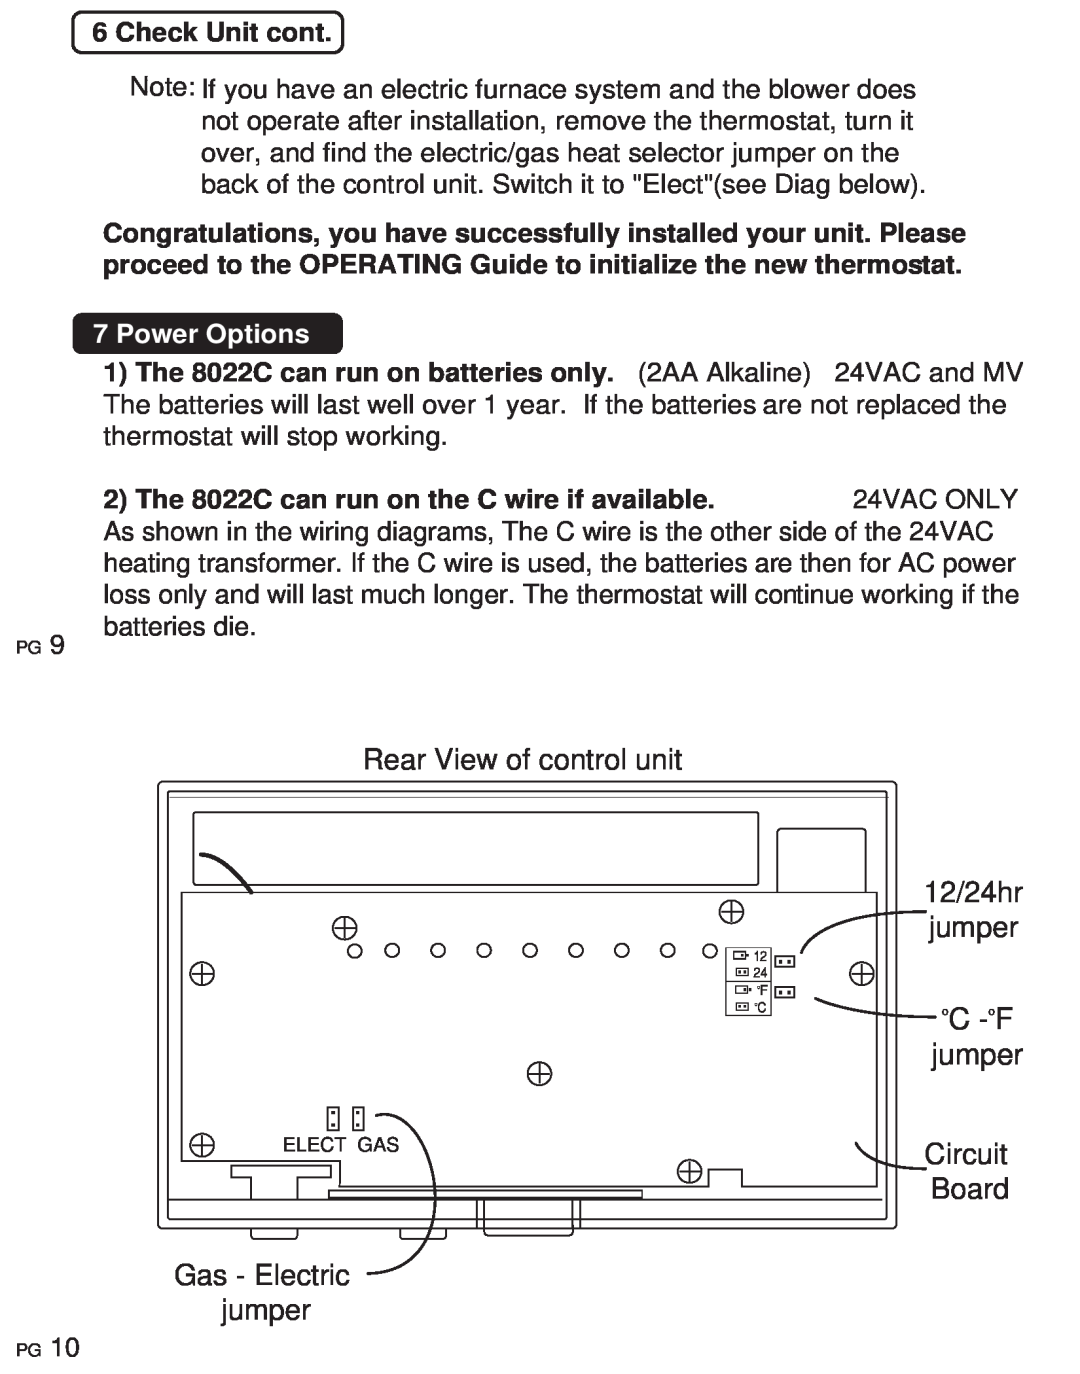 ritetemp 401-014 Rear View of control unit, 12/24hr, Circuit, Board, Gas - Electric jumper, Check Unit cont, oC -oF 